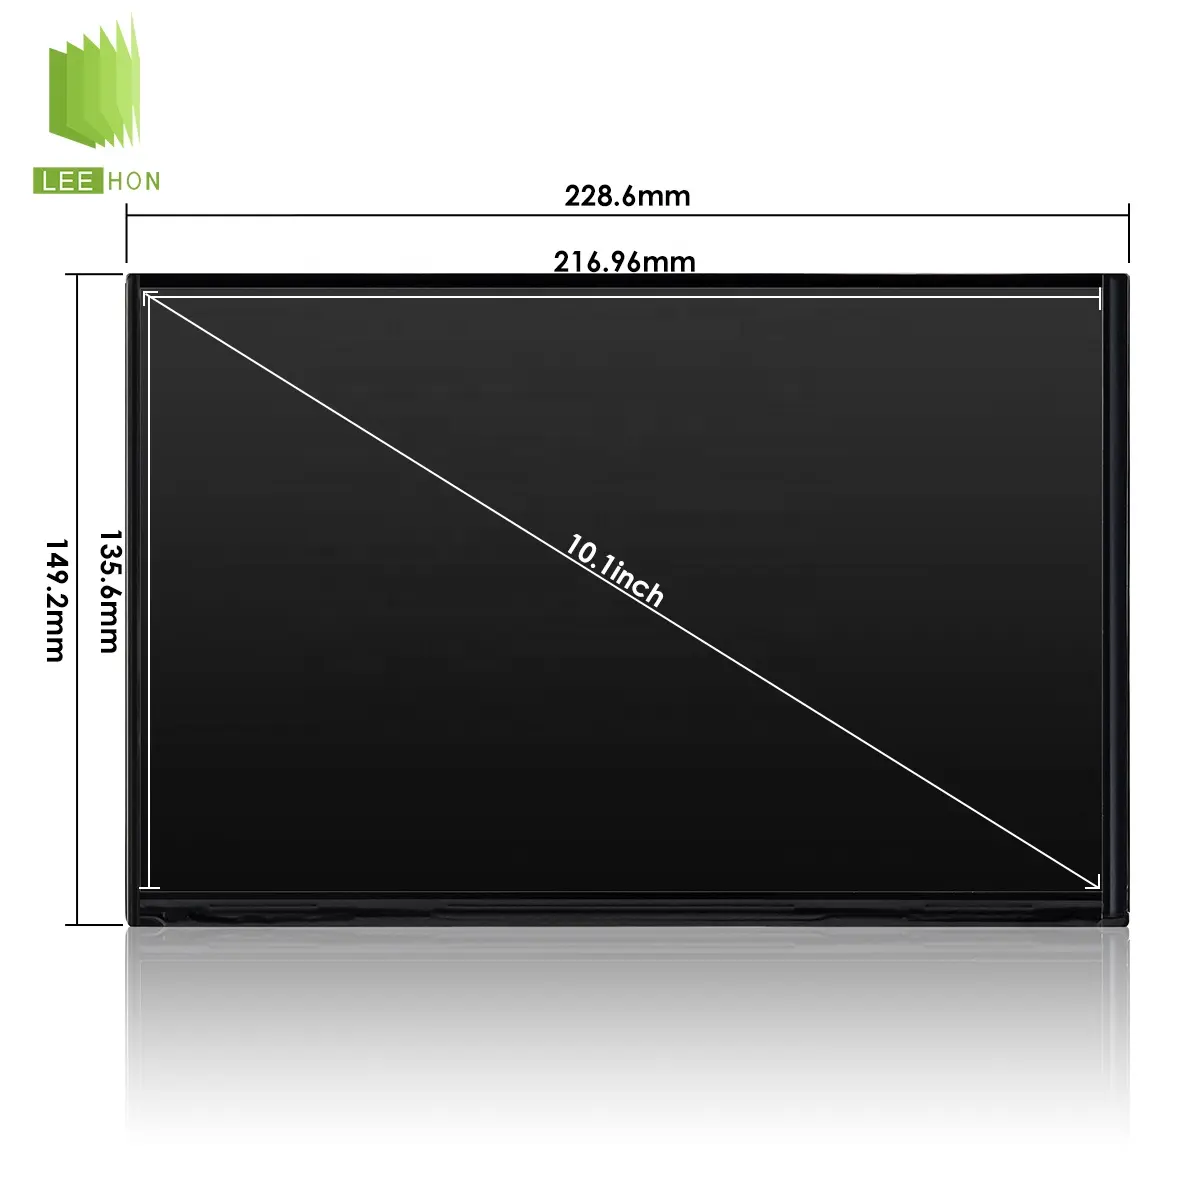 BOE Industrial grade LCD panel 7 8 10.1 10.4 12.1 15 15.6 17 19 21.5 inch full size LCD module high brightness IPS TFT LCD Panel